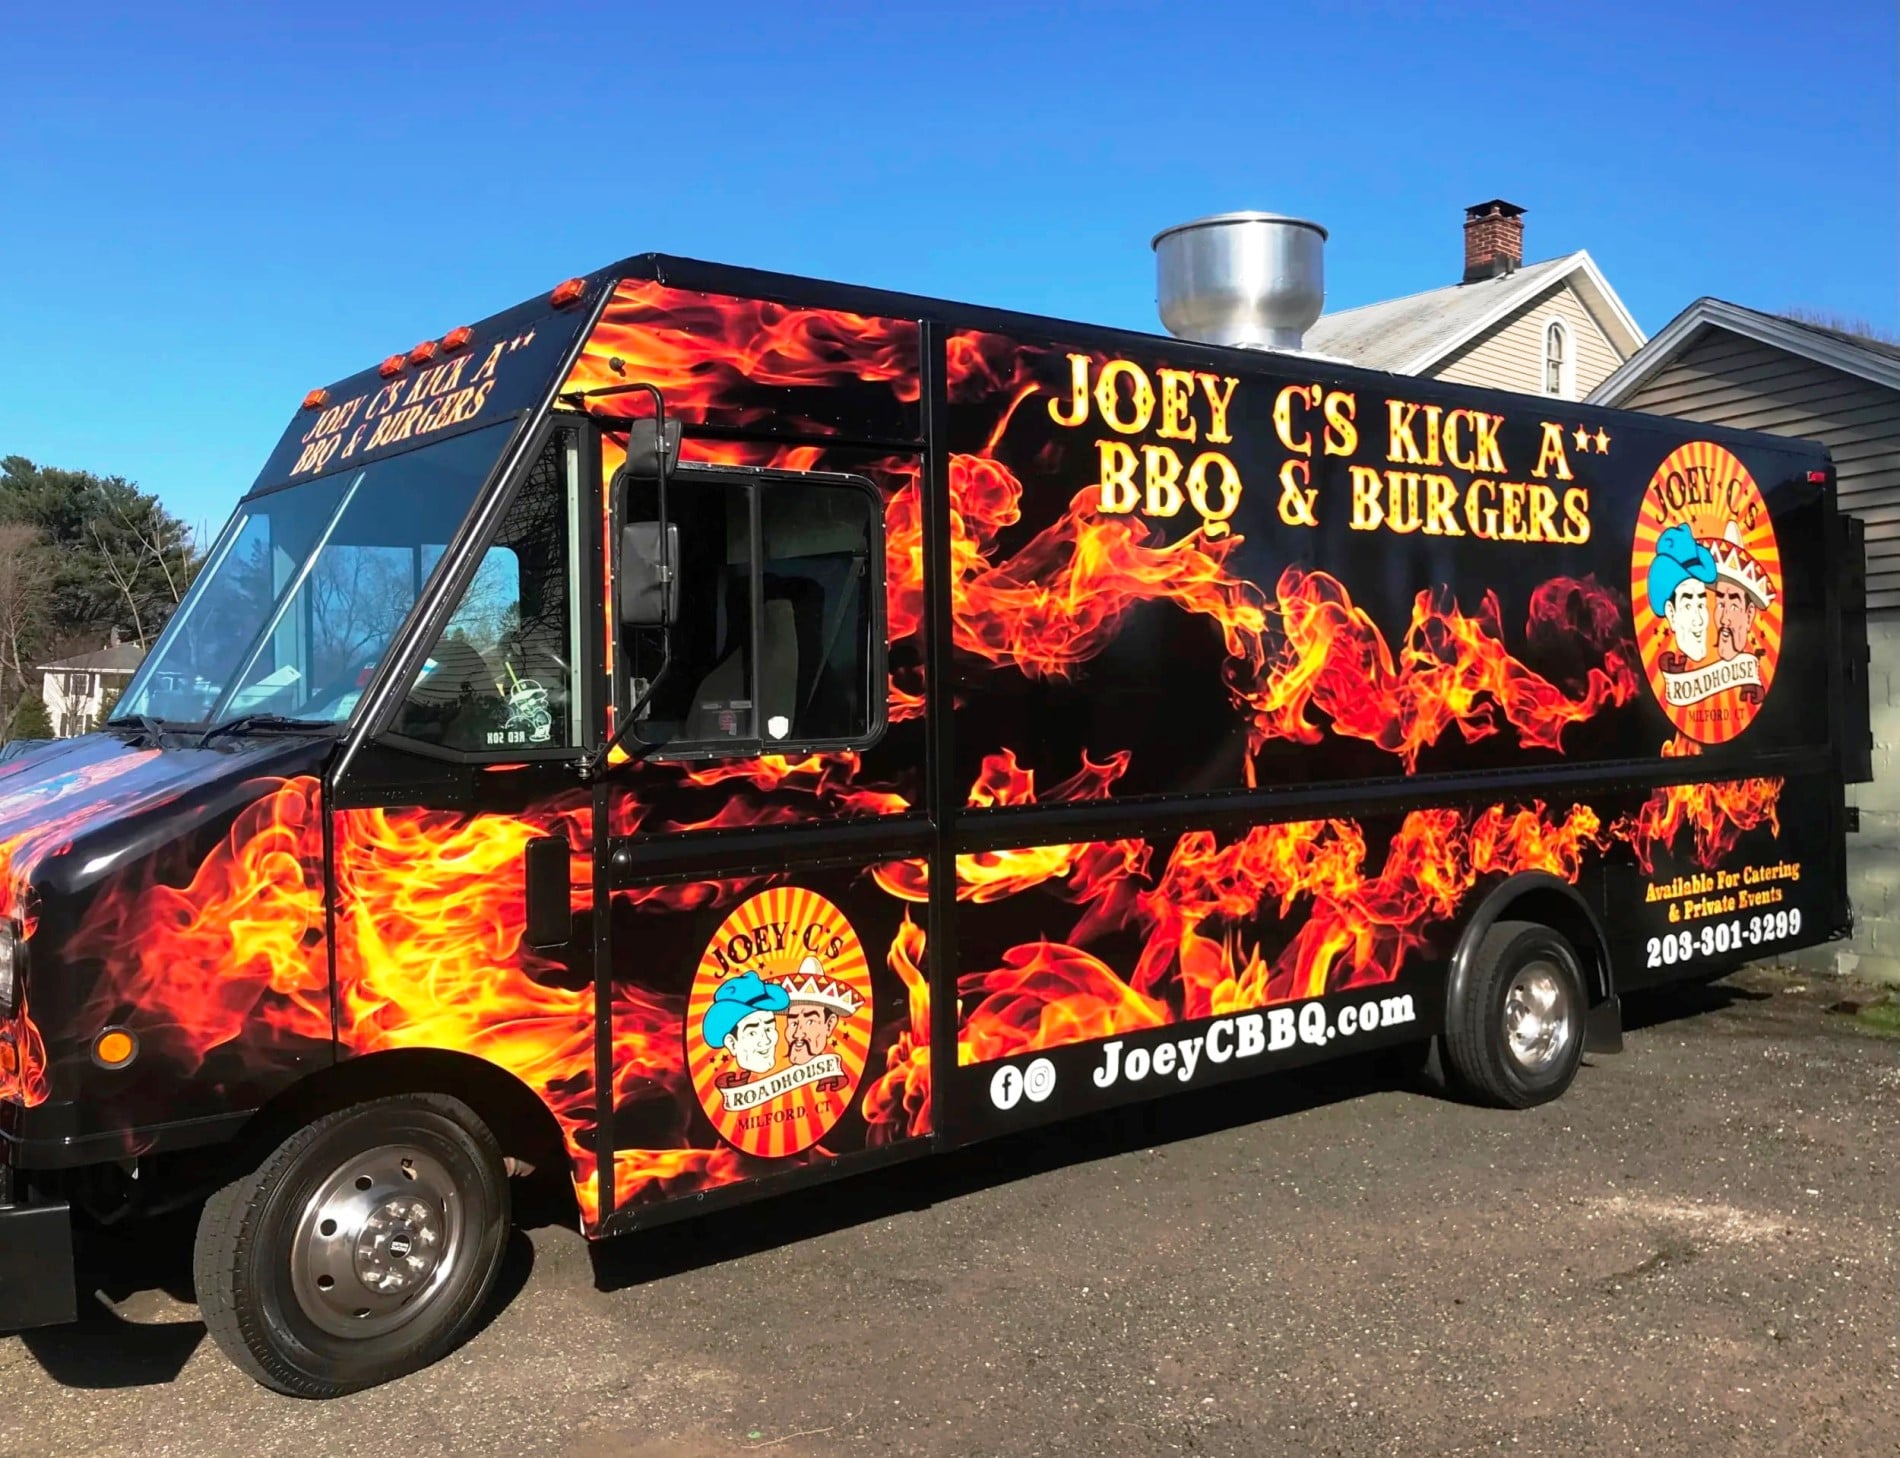 Joey C’s Kick A** BBQ and Burgers | CT Food Trucks